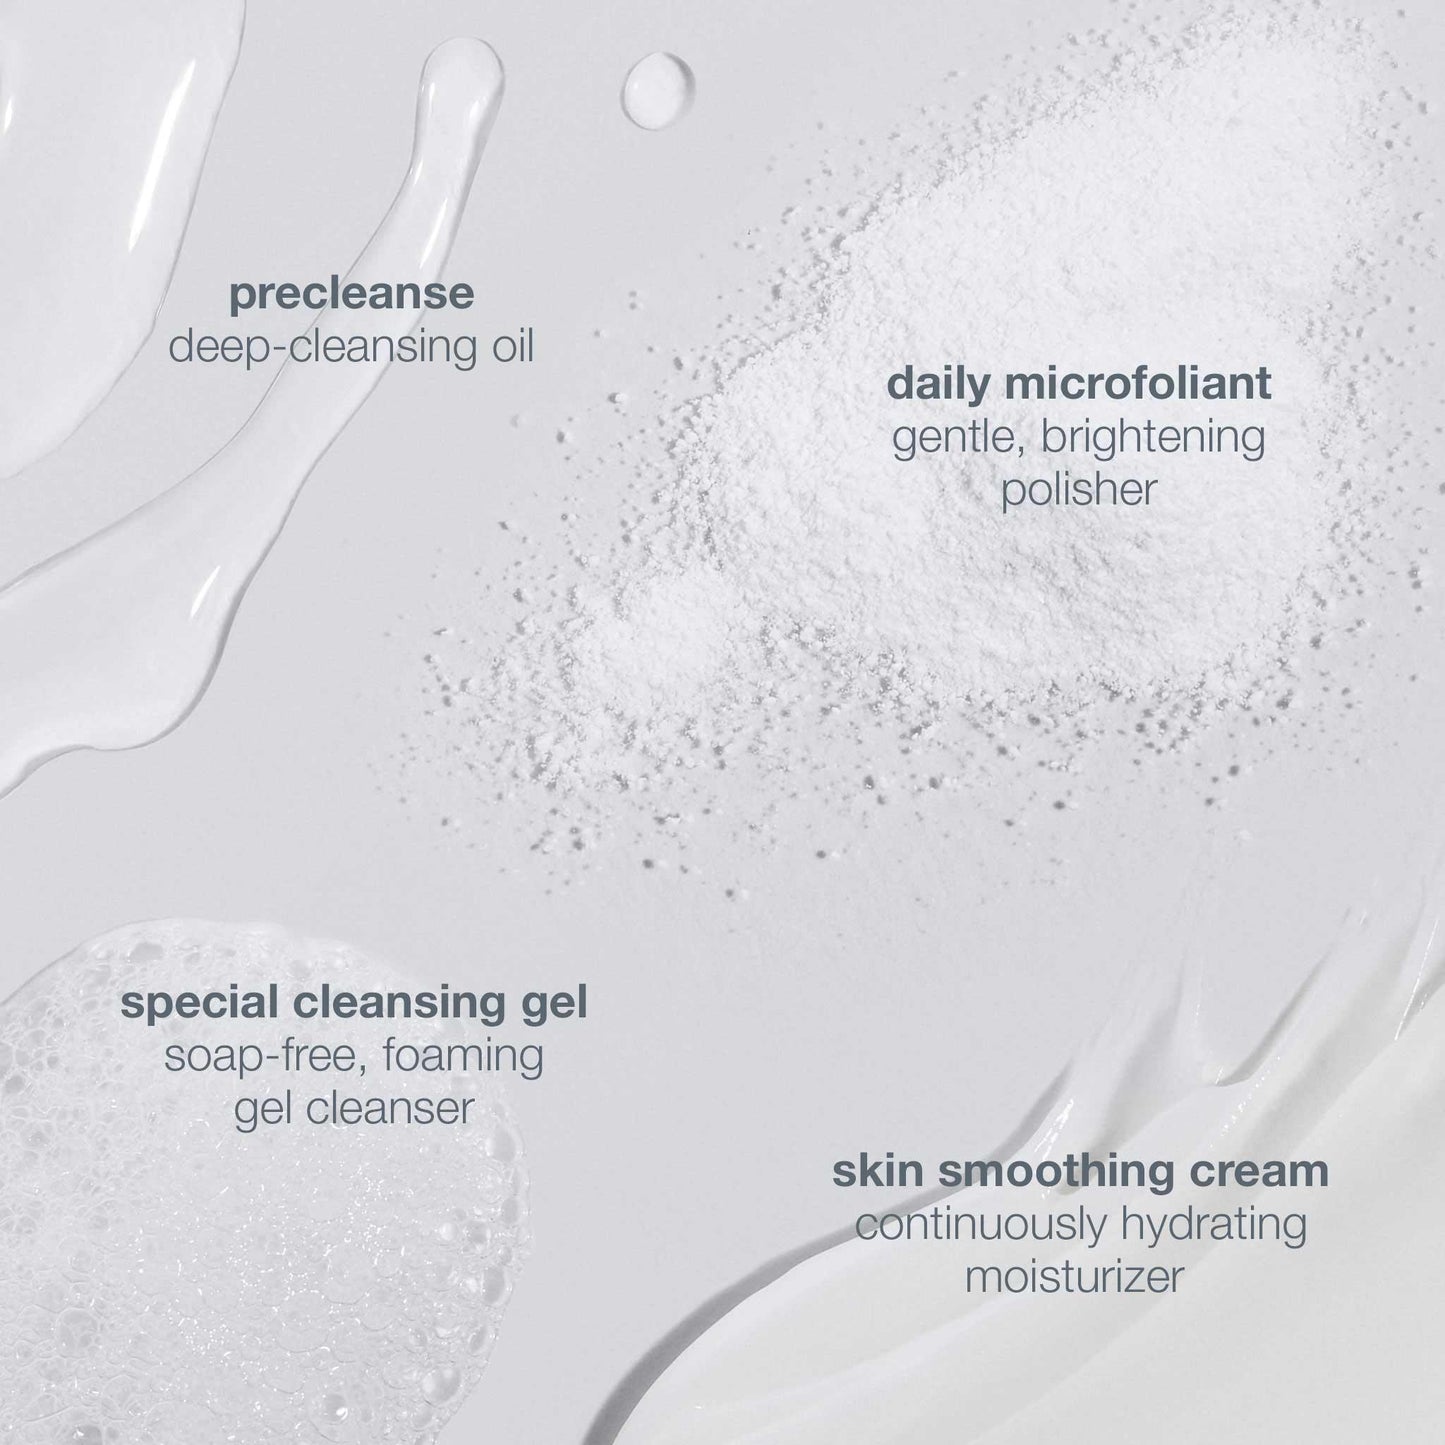 discover healthy skin kit - Dermalogica Hong Kong